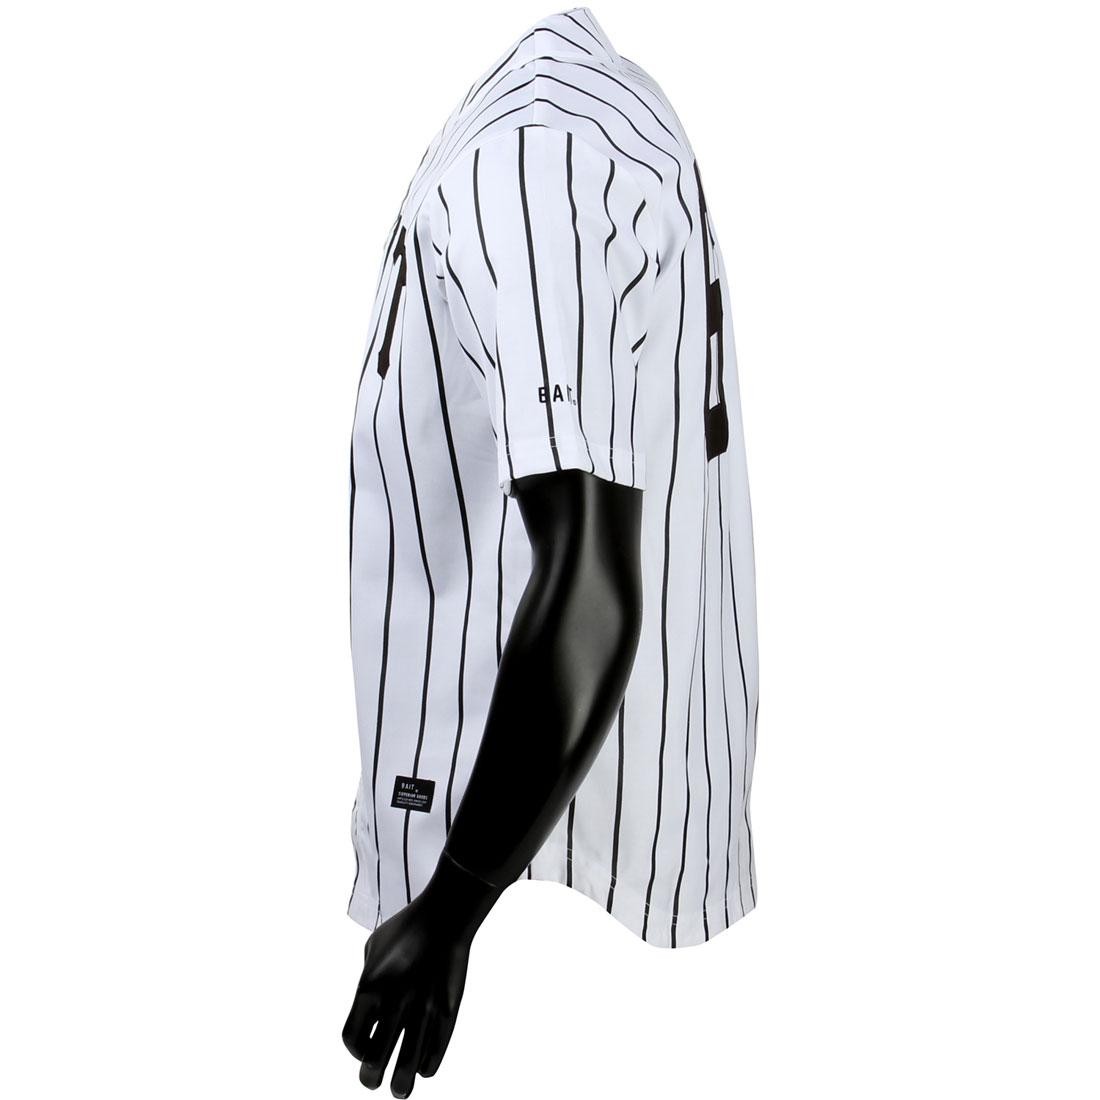 StclaircomoShops Men Sluggers Baseball Jersey - Pinstripe black white  pinstripe